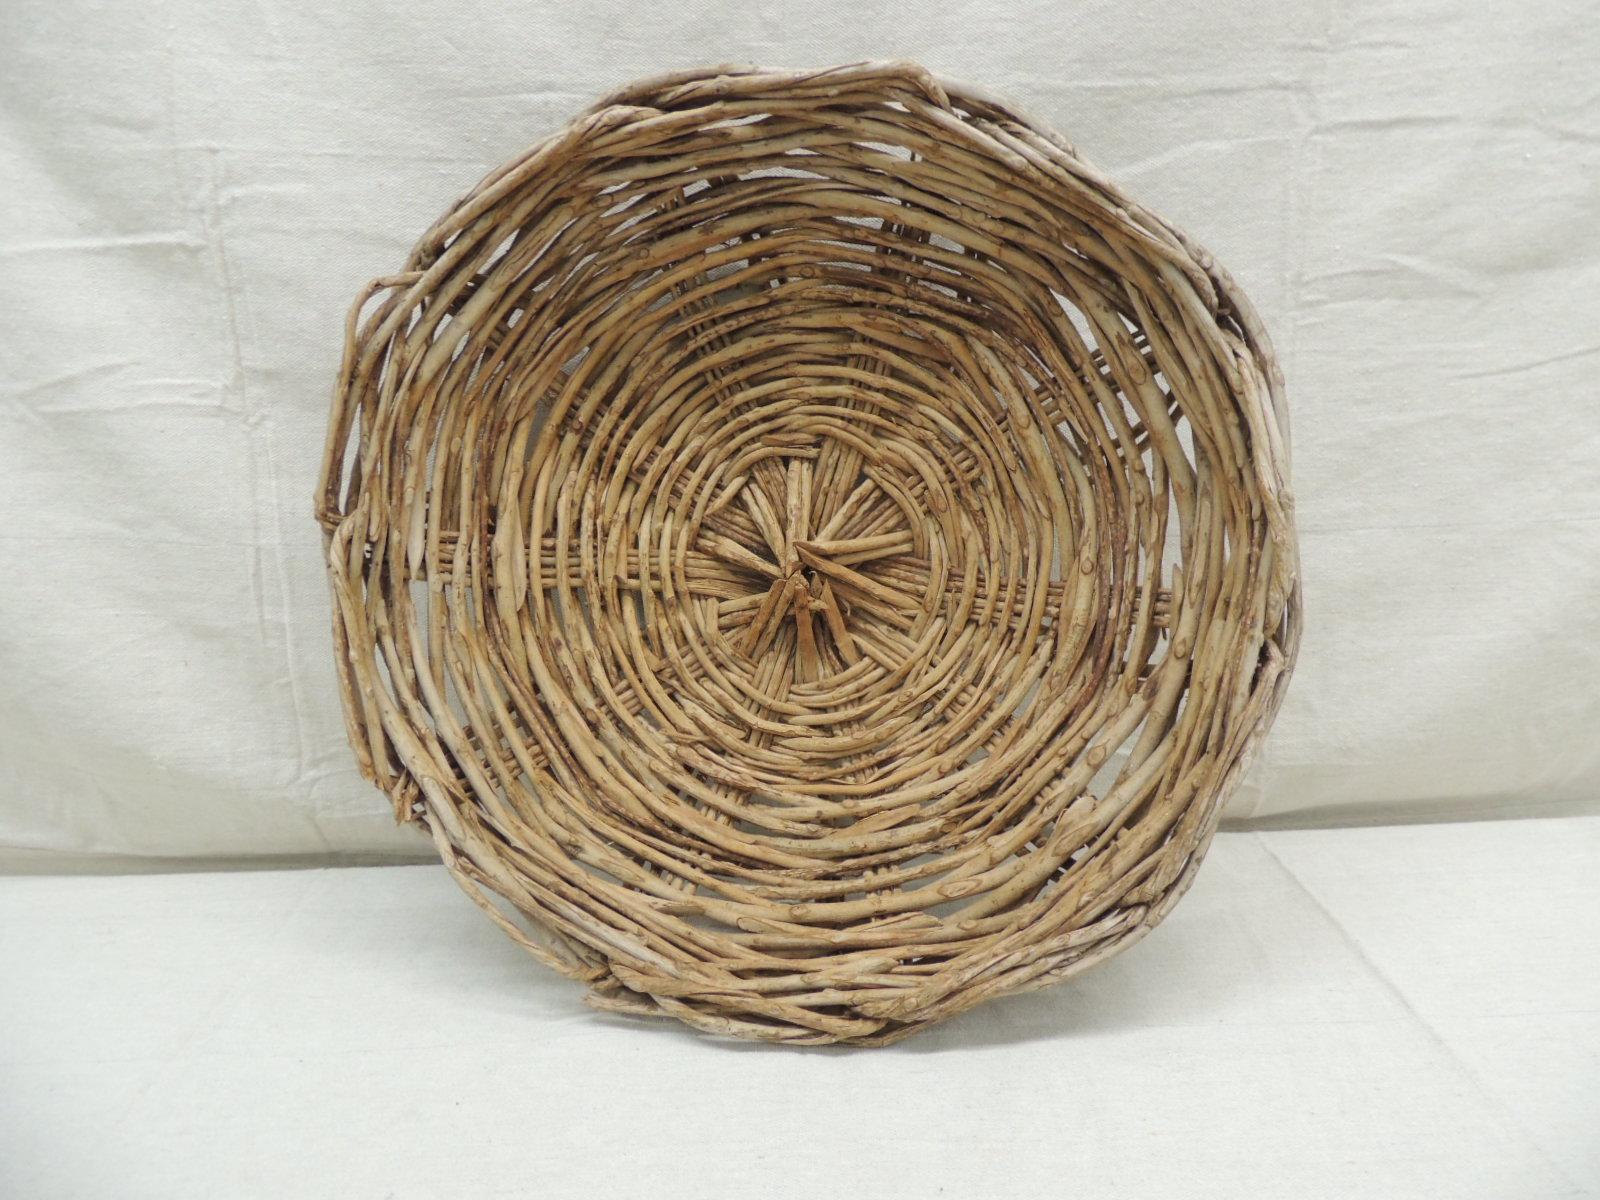 Wide circular Artisanal style trellis basket
Size: 21 x 21 x 5.